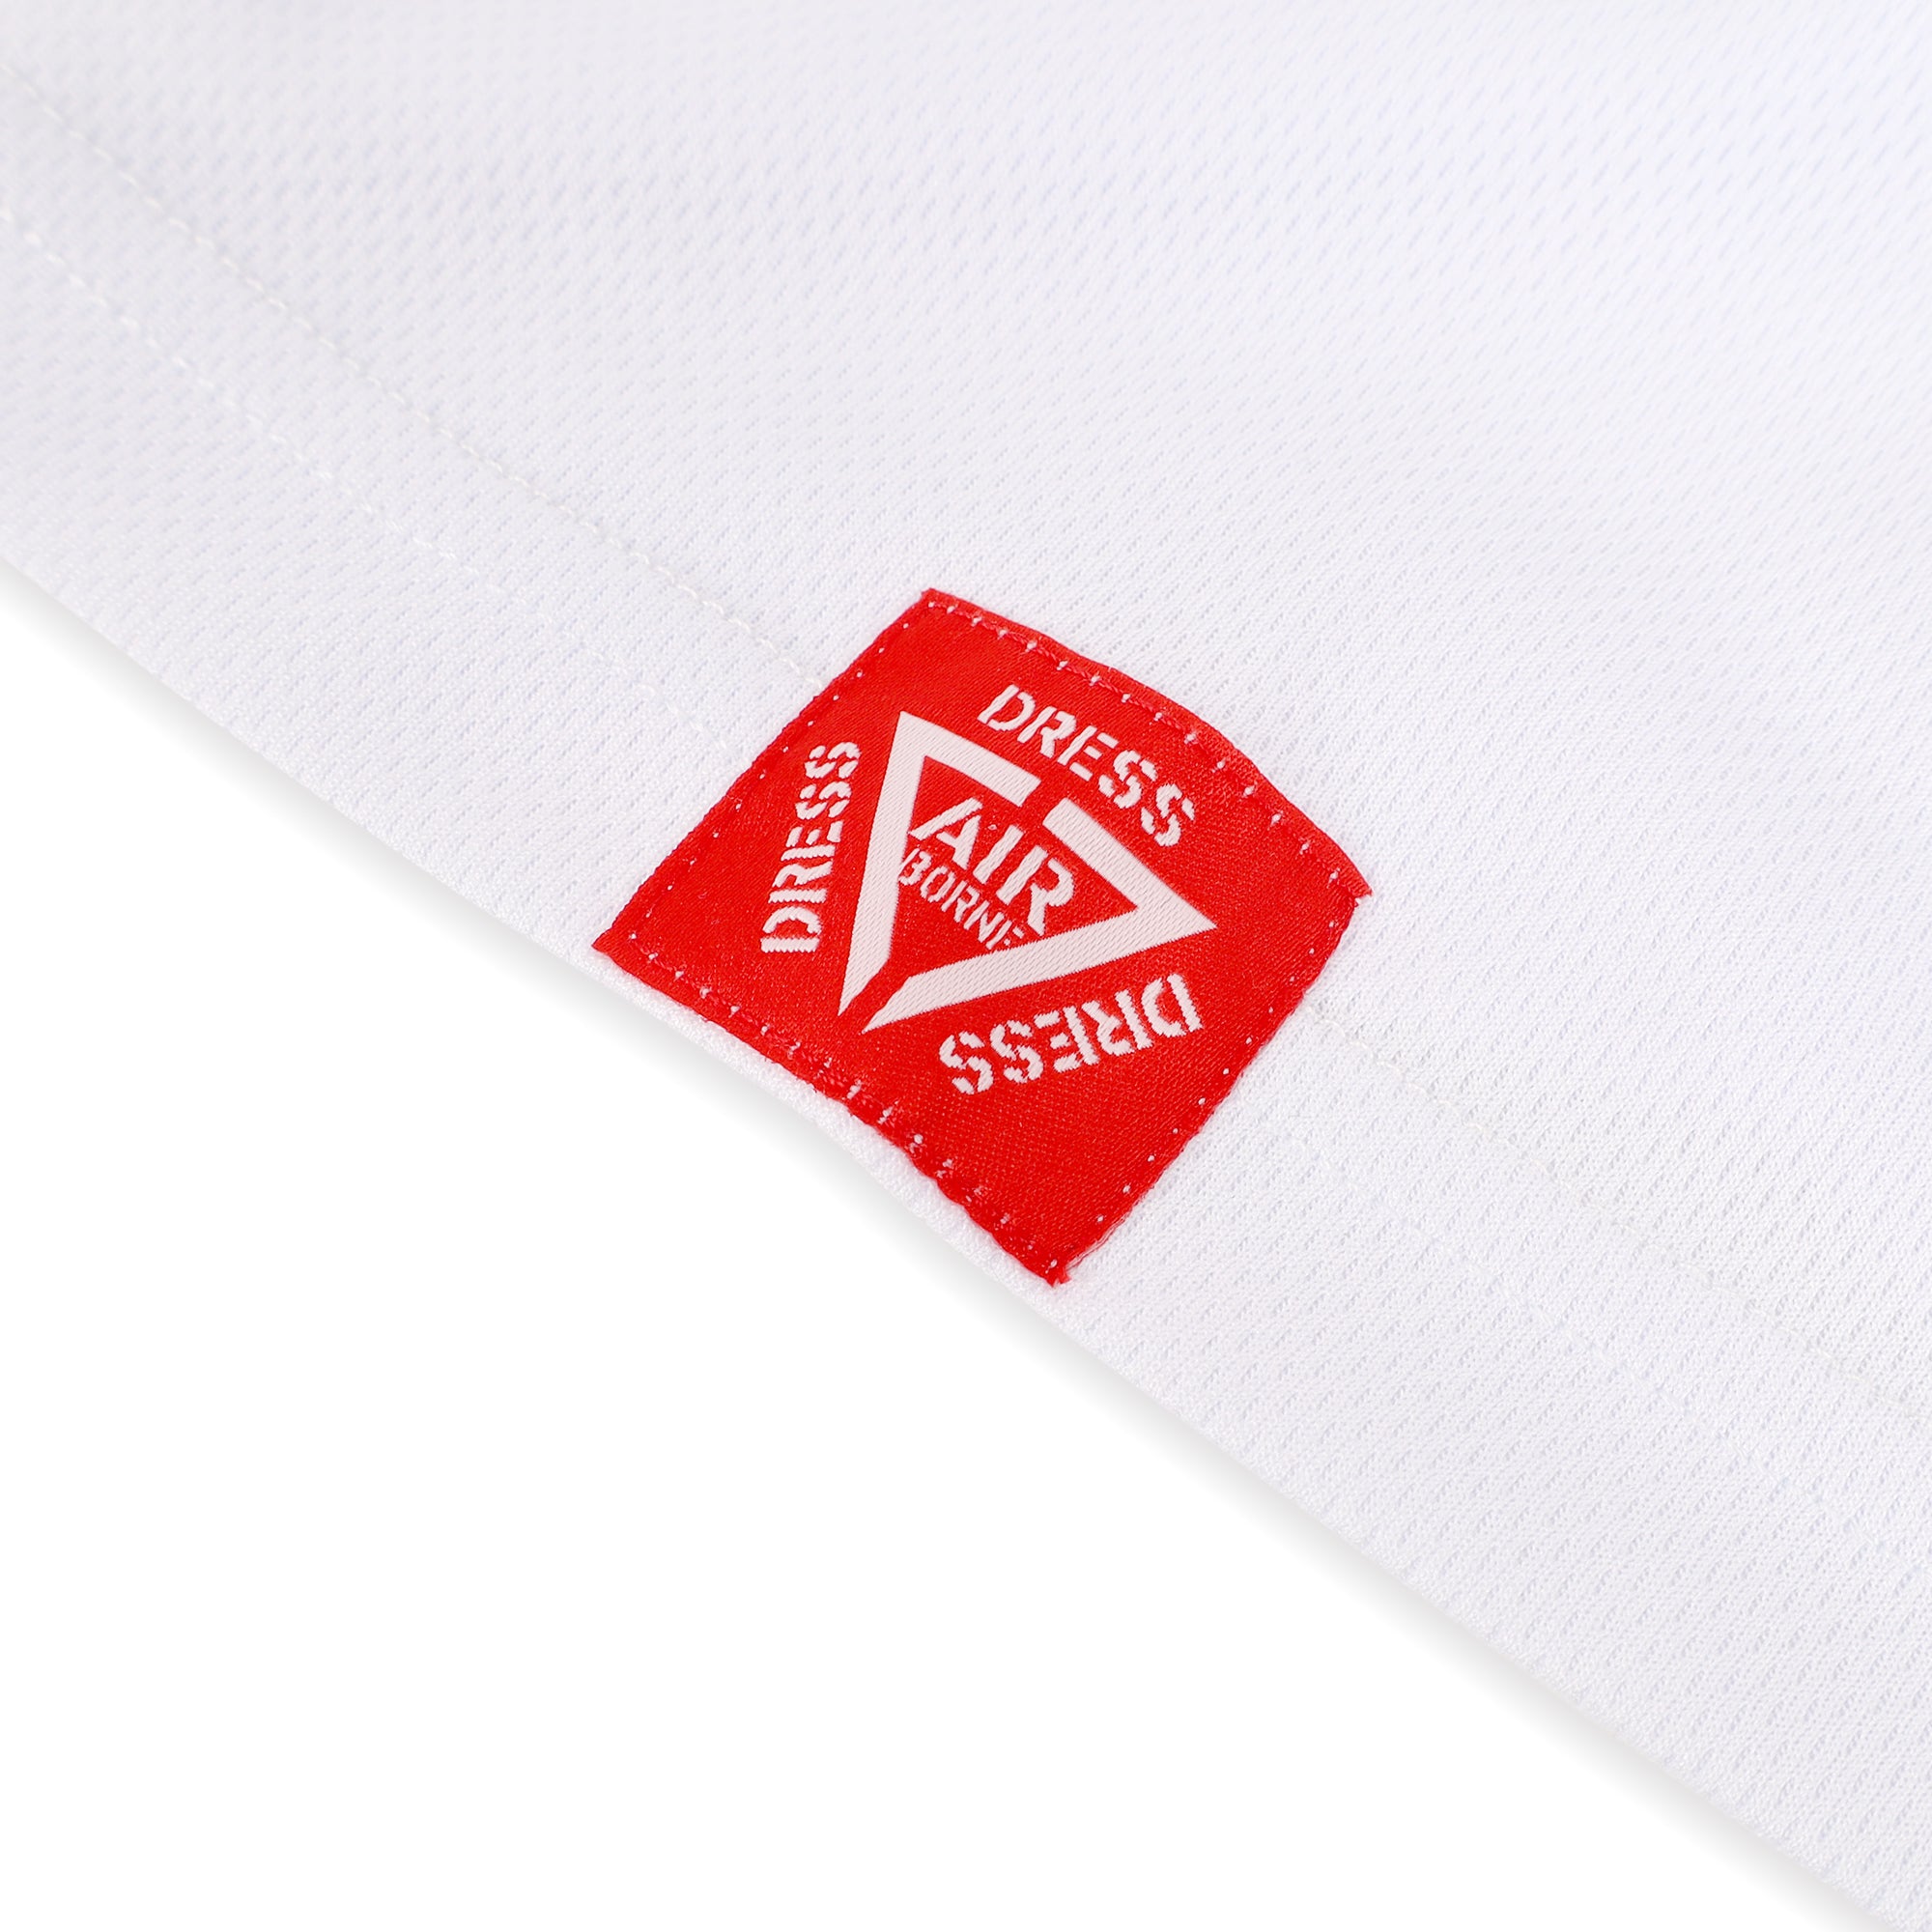 DRESS サイバーロゴ ドライTシャツ【ホワイト】